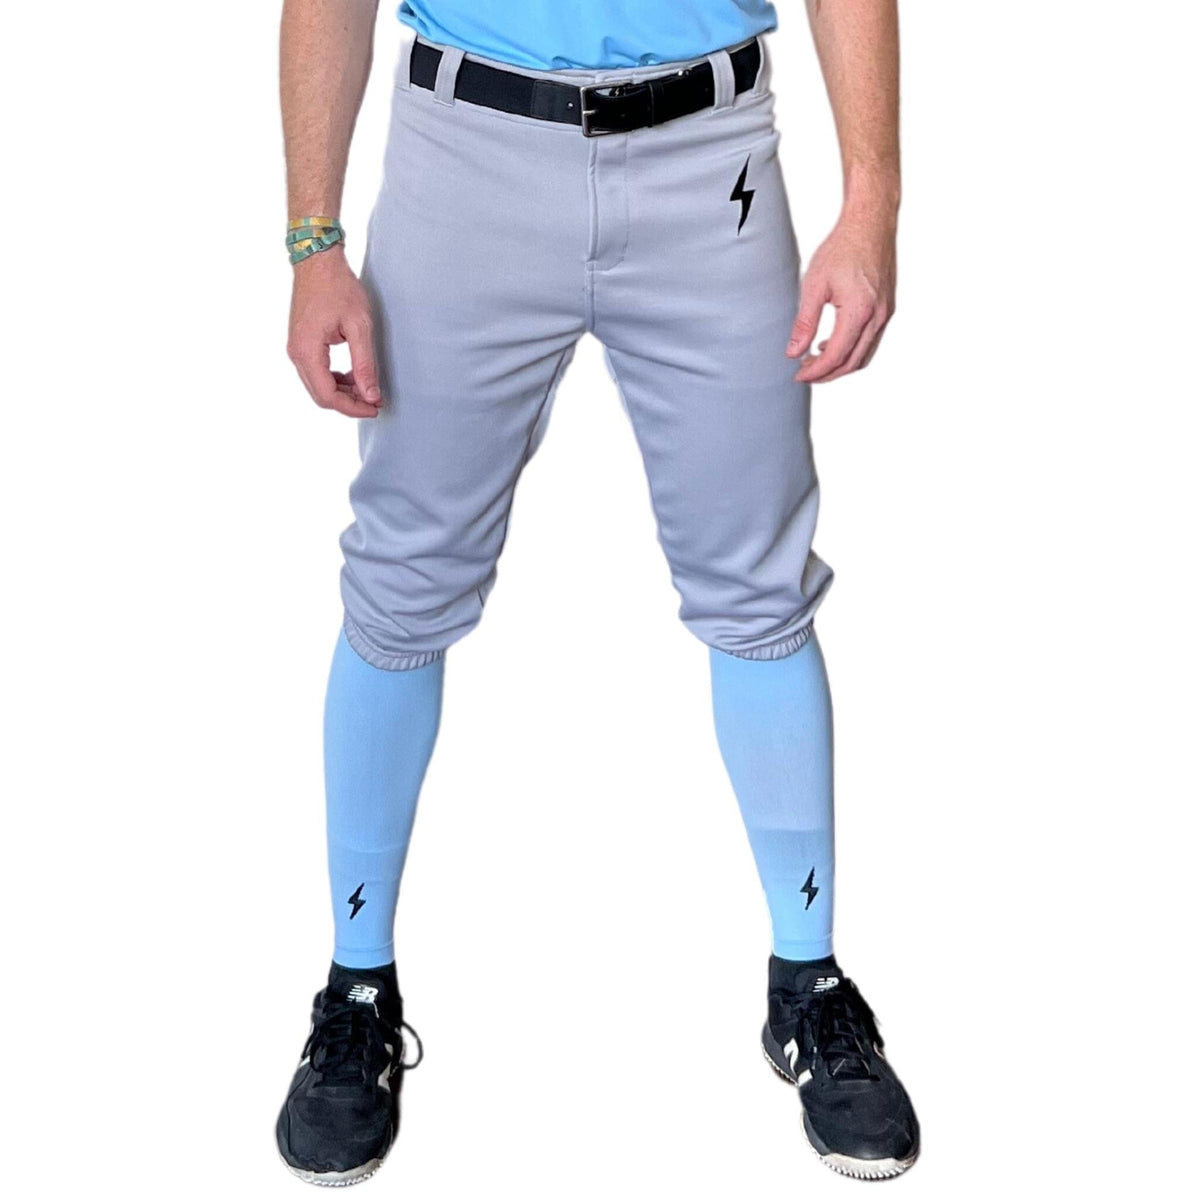 Louisville Slugger Men's Slugger Player's Boot-Cut Baseball Pants, Gray 